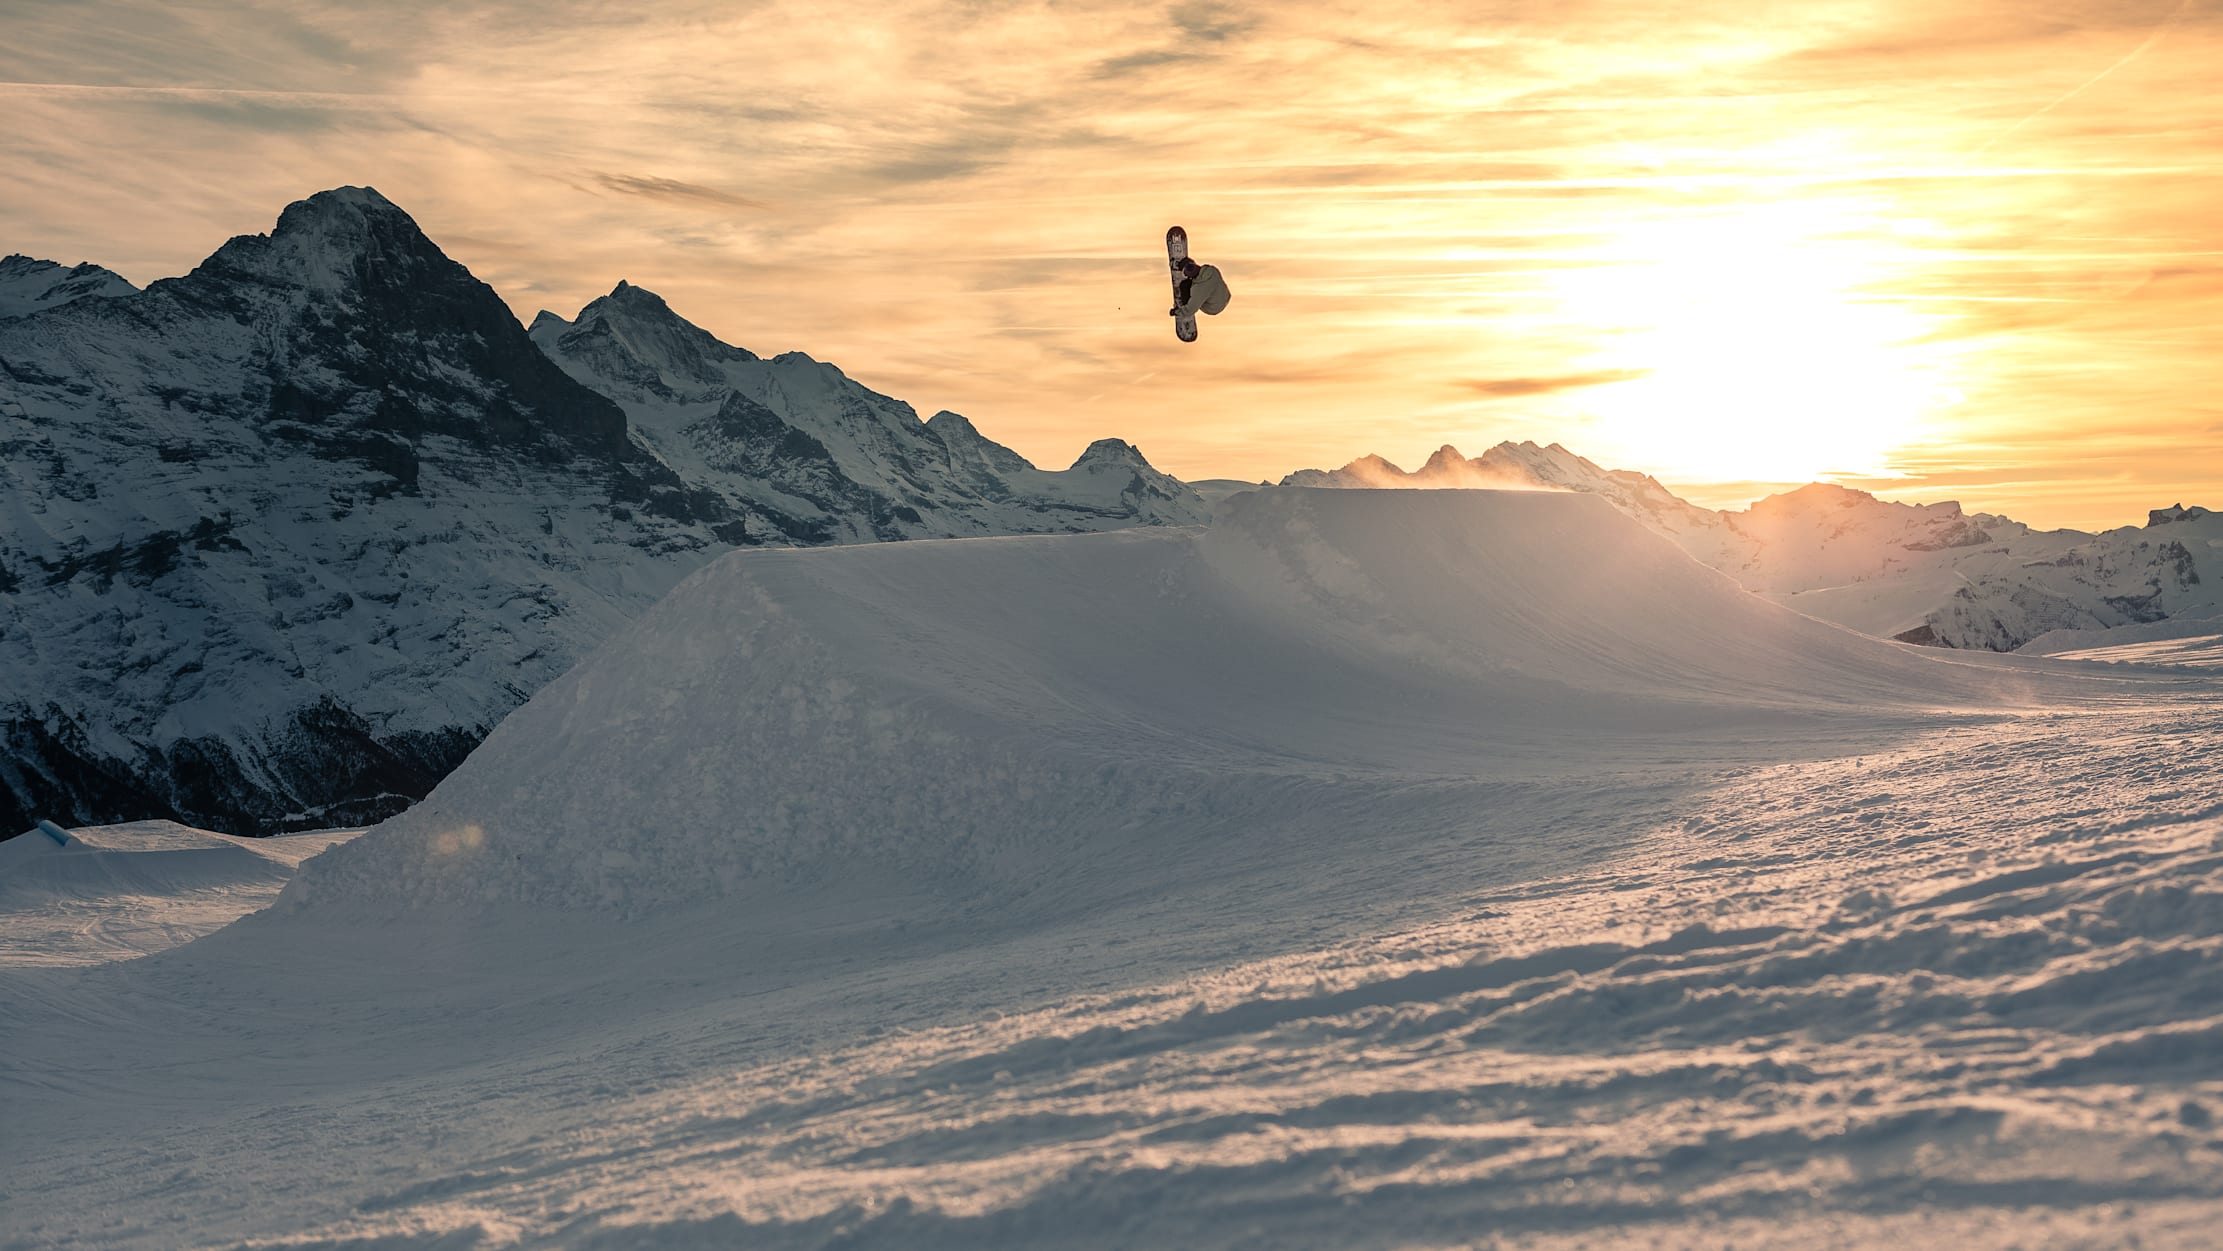 Sunset Snowboarding Wallpapers